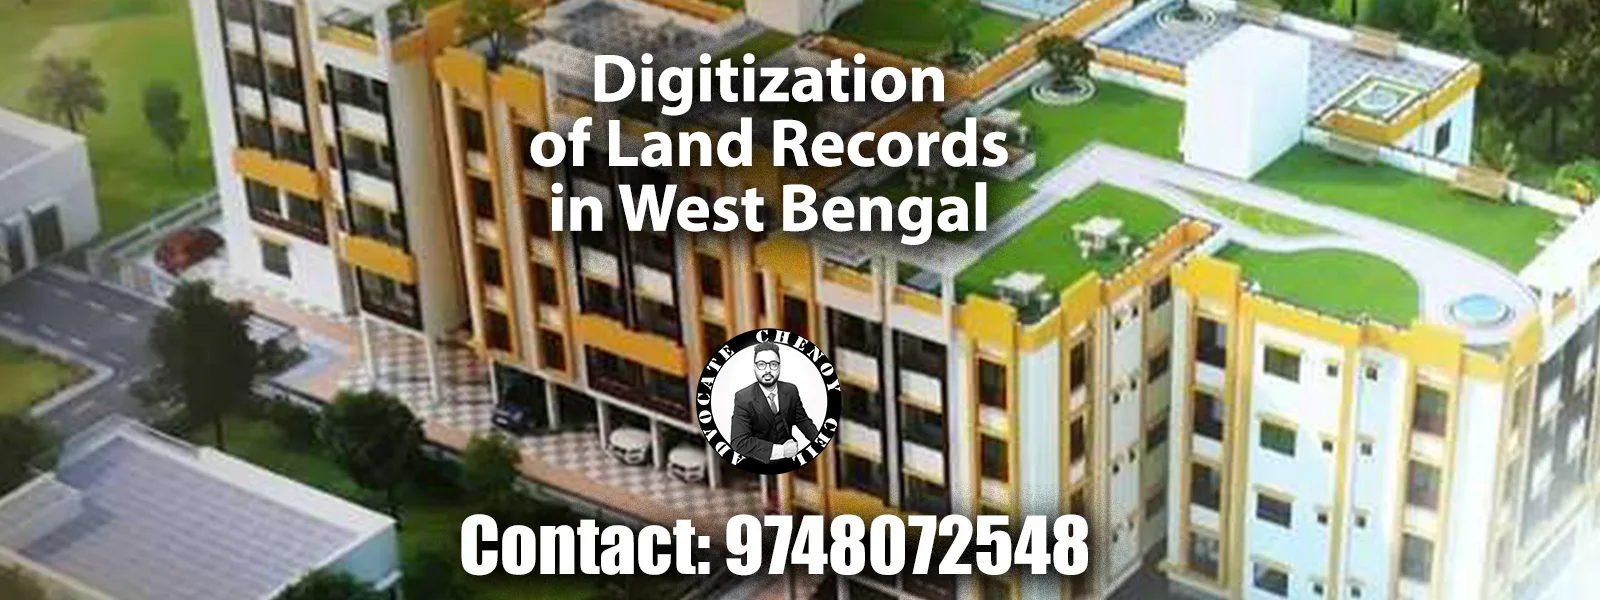 Digitisation of land records